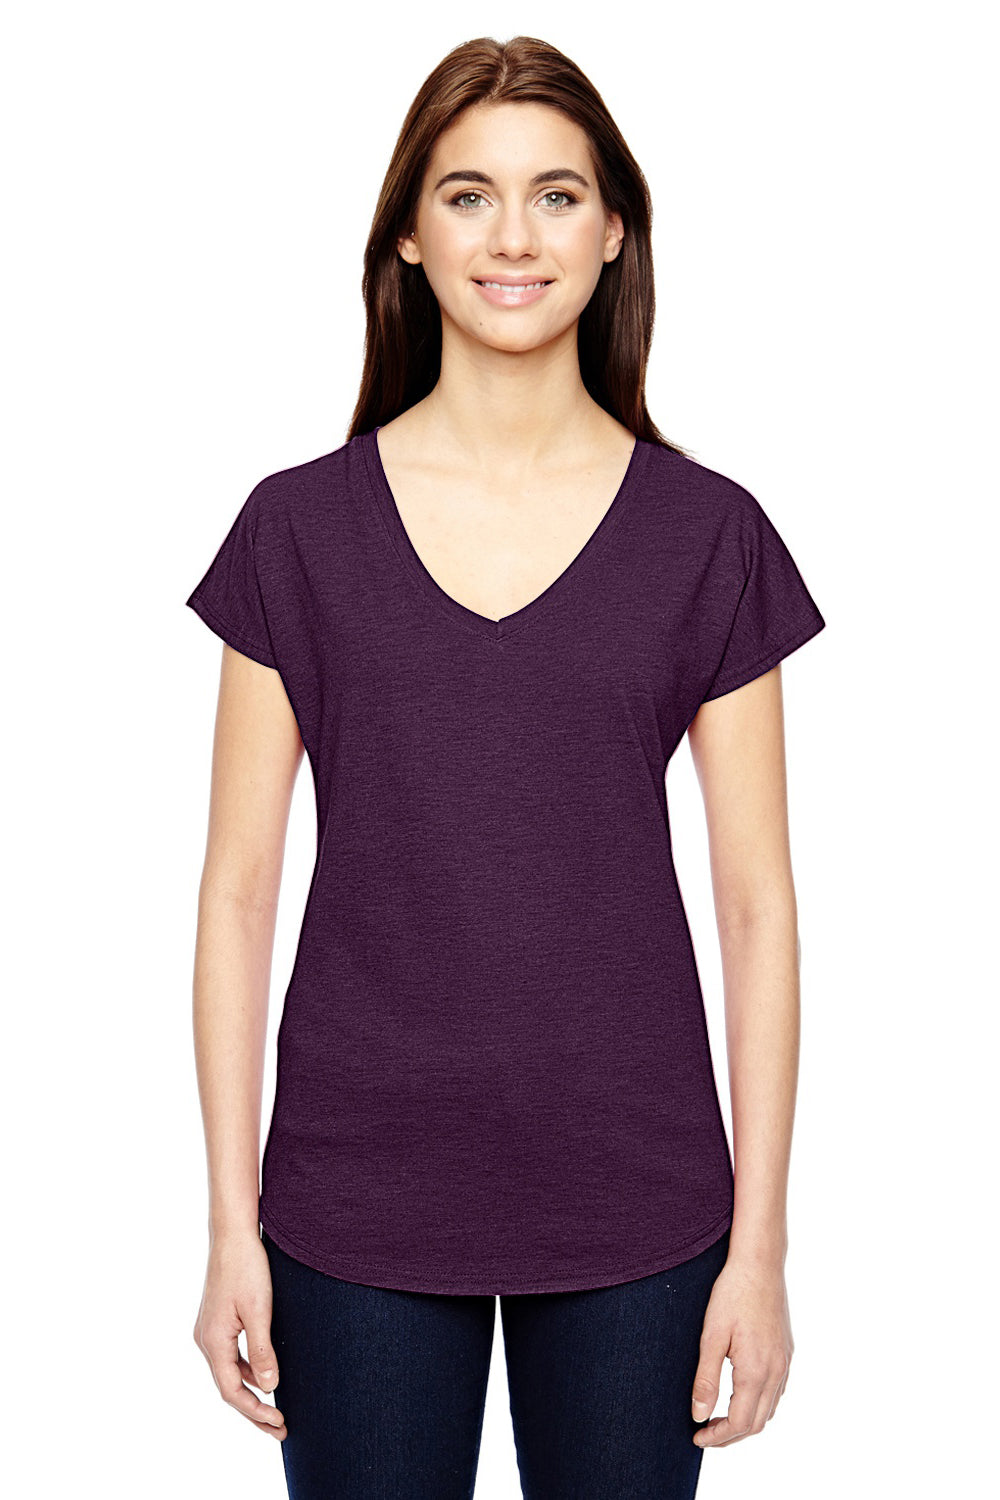 Anvil 6750VL Womens Short Sleeve V-Neck T-Shirt Heather Aubergine Purple Front